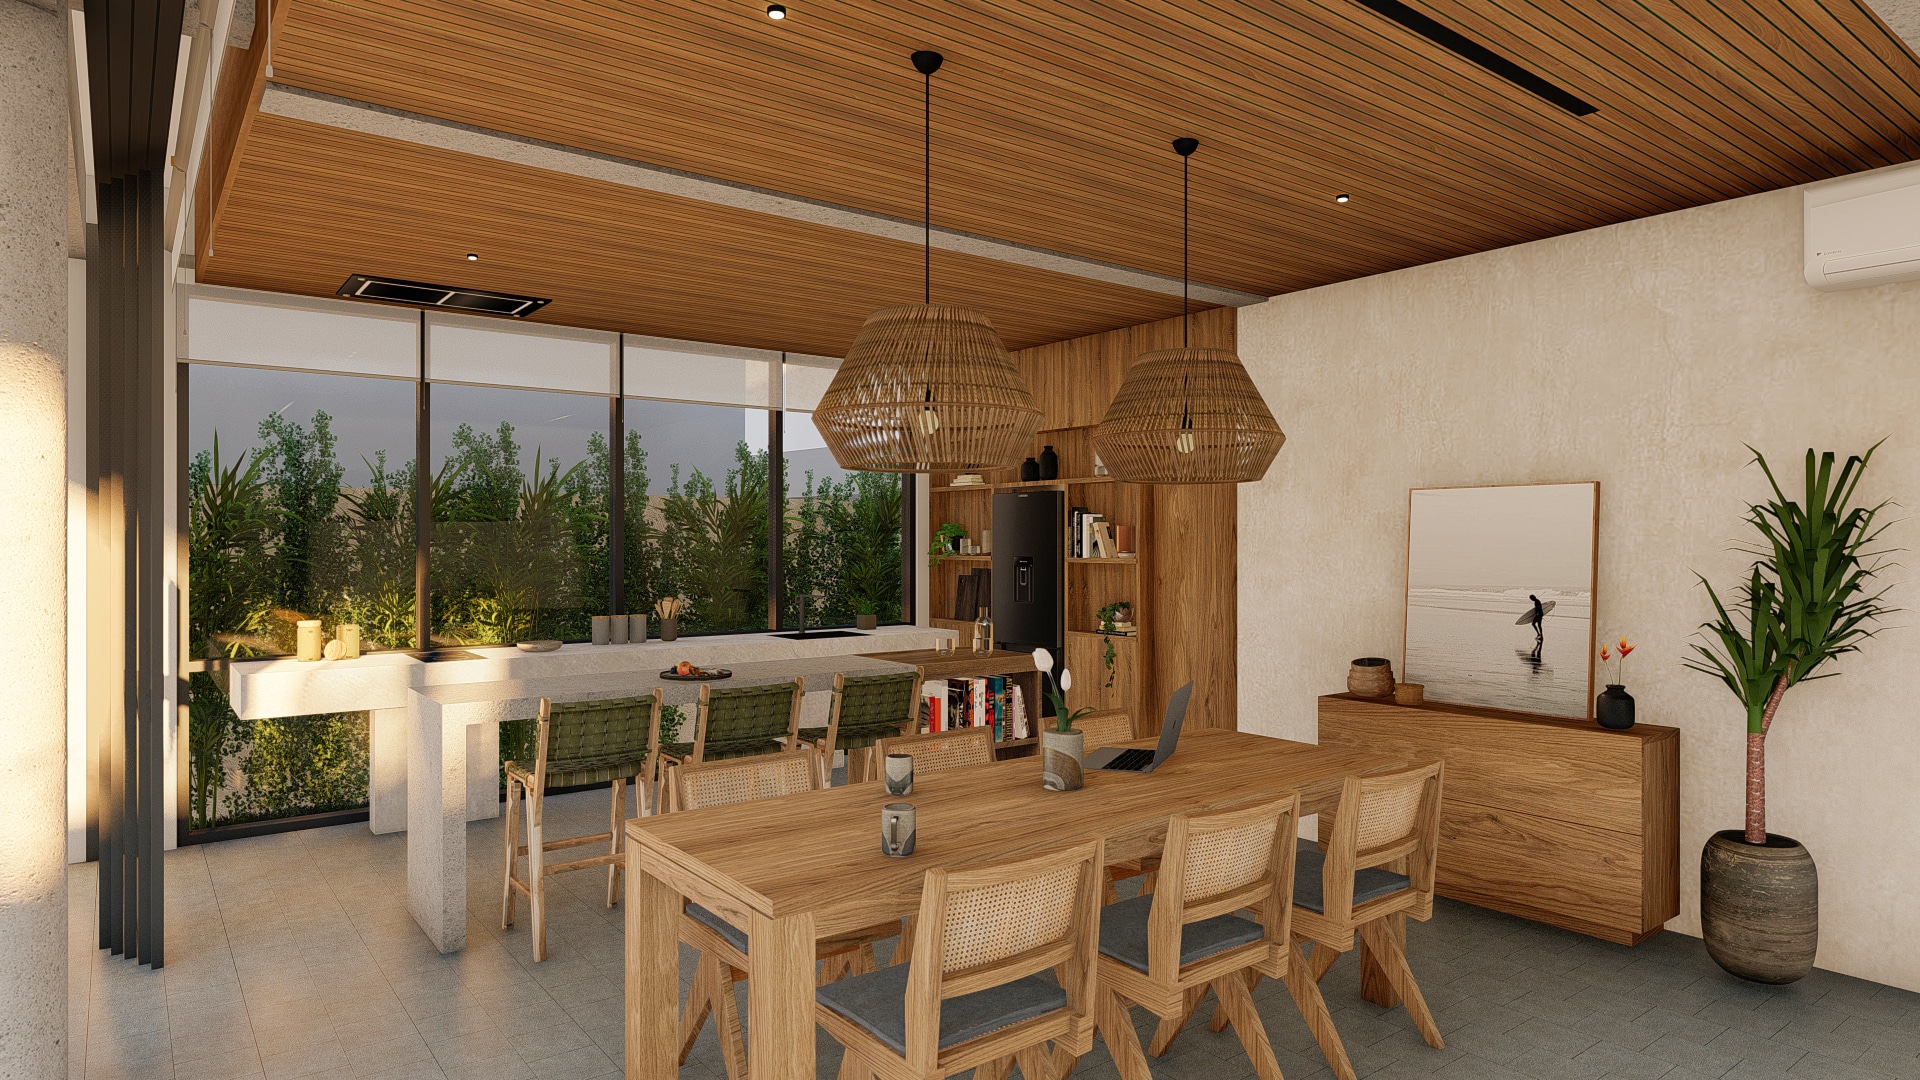 Design Assembly - MacDonald Villa - Bali Architect - Interior Design - Bali Villa - Wooden Facade - Dining Kitchen